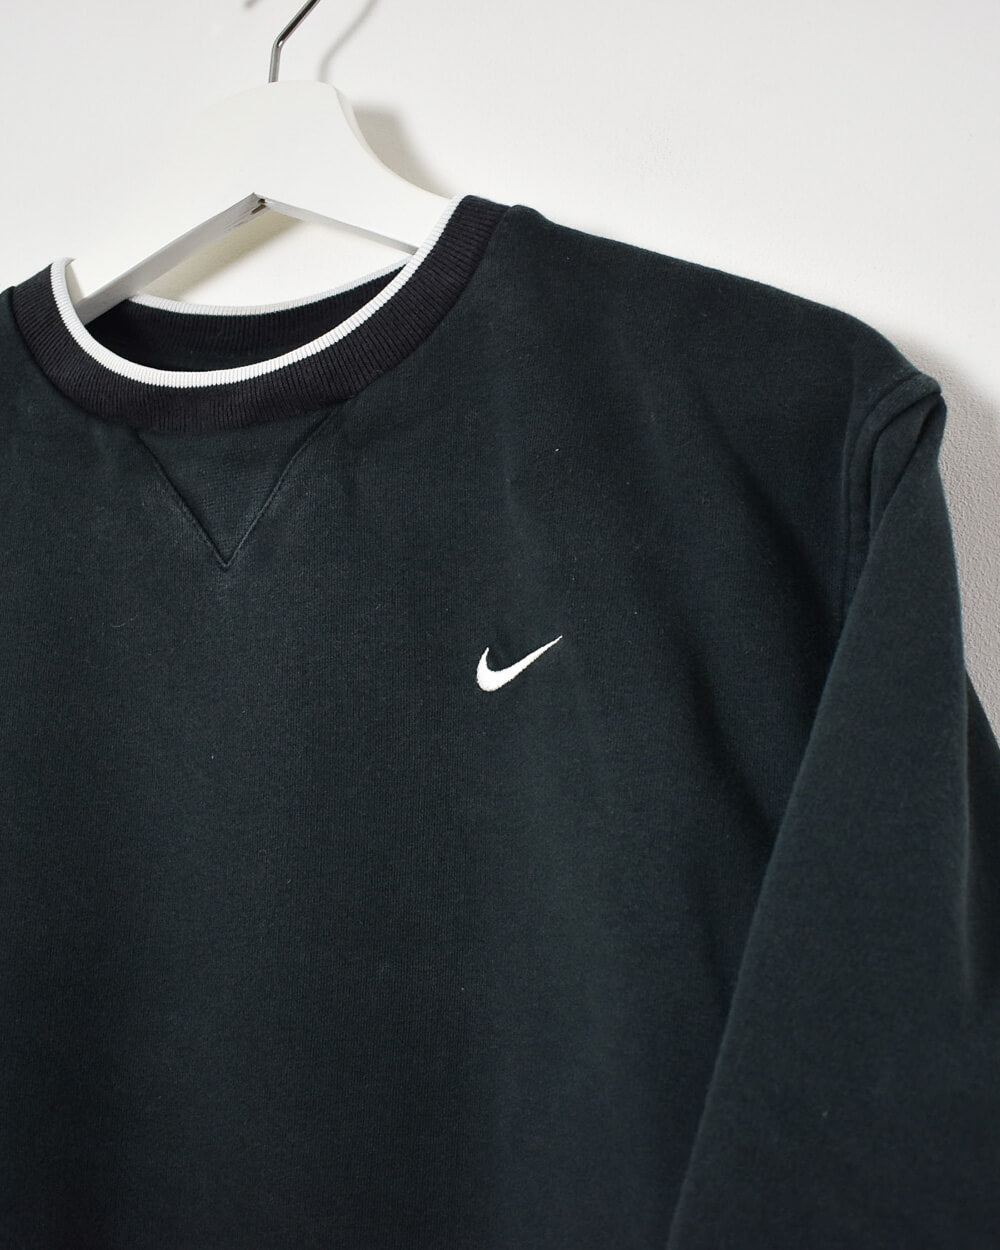 Nike Women's Sweatshirt - Large - Domno Vintage 90s, 80s, 00s Retro and Vintage Clothing 